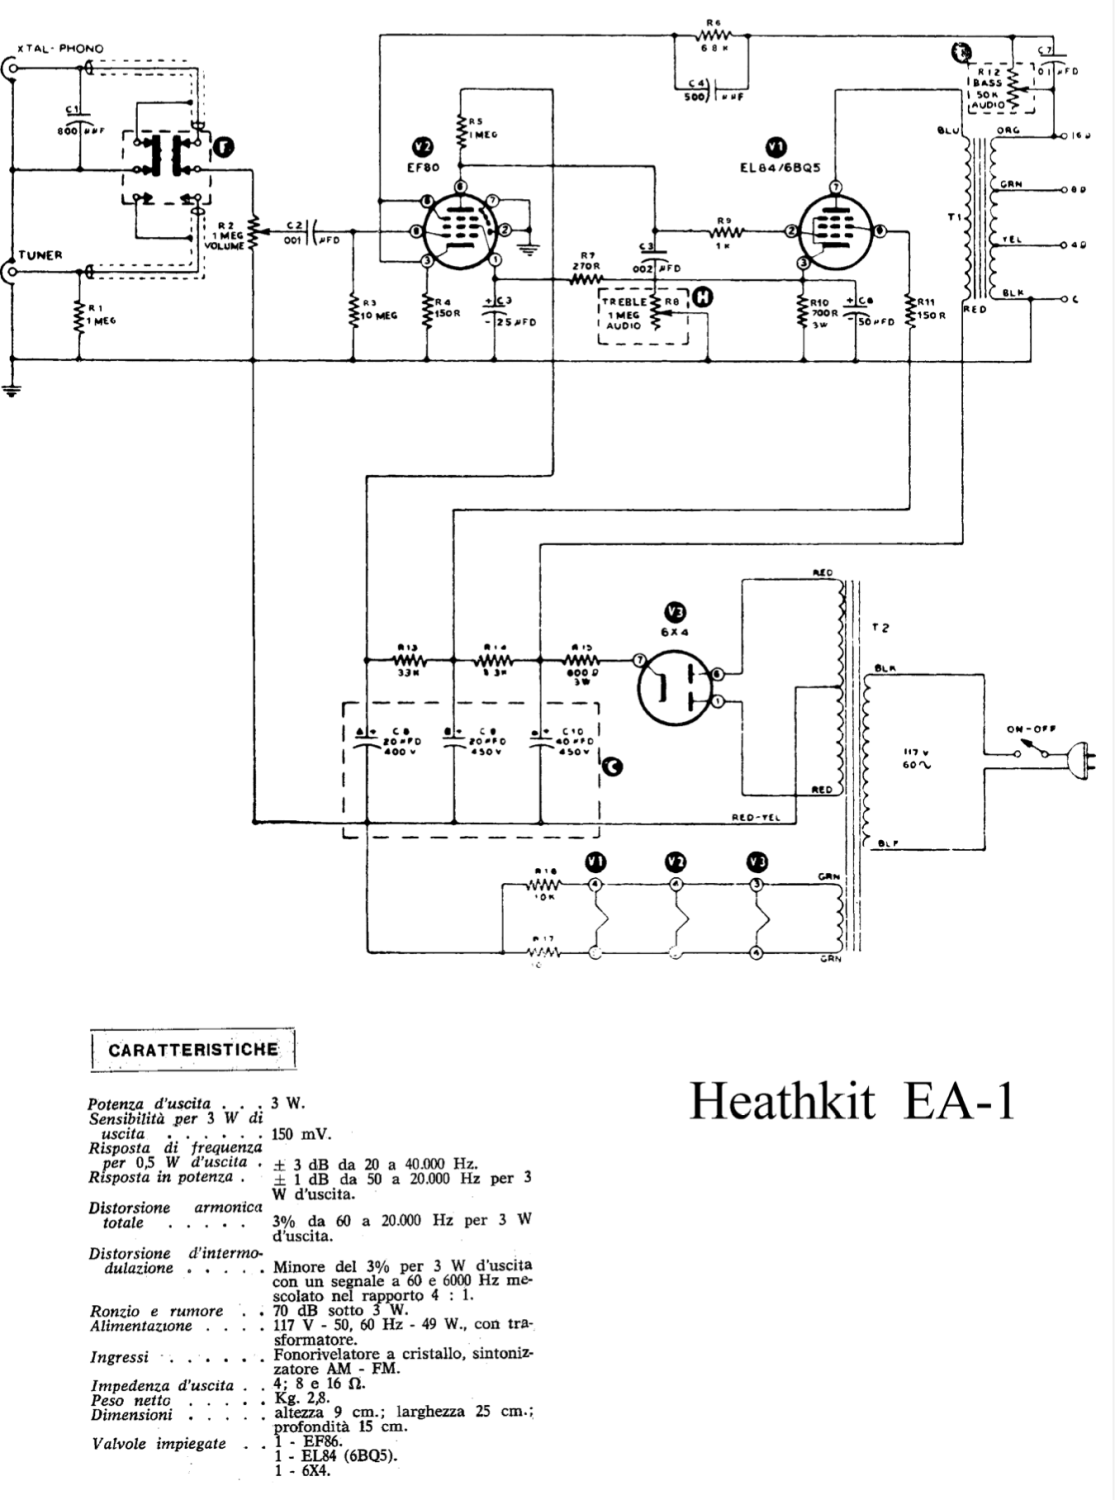 Heathkit EA-1 Amplifier - Schematic Diagram